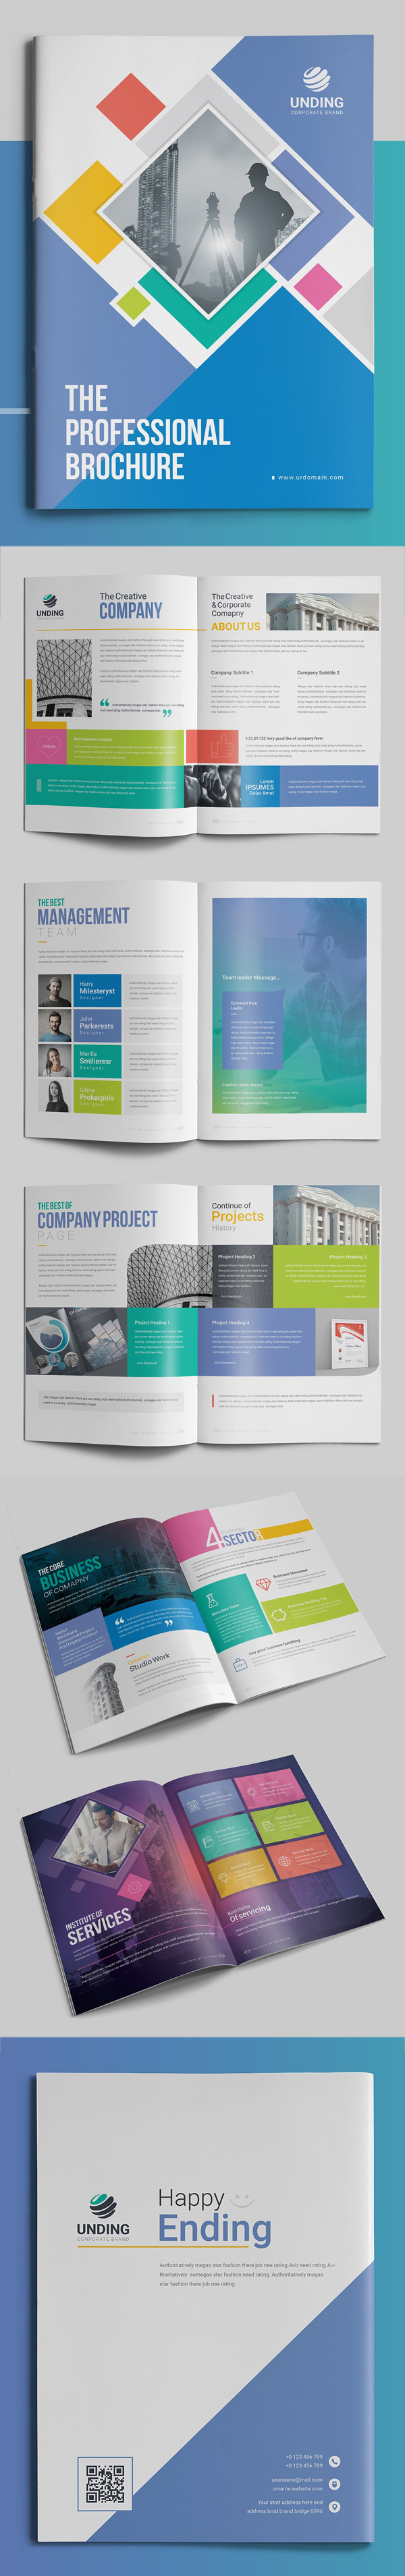 100 Professional Corporate Brochure Templates - 54